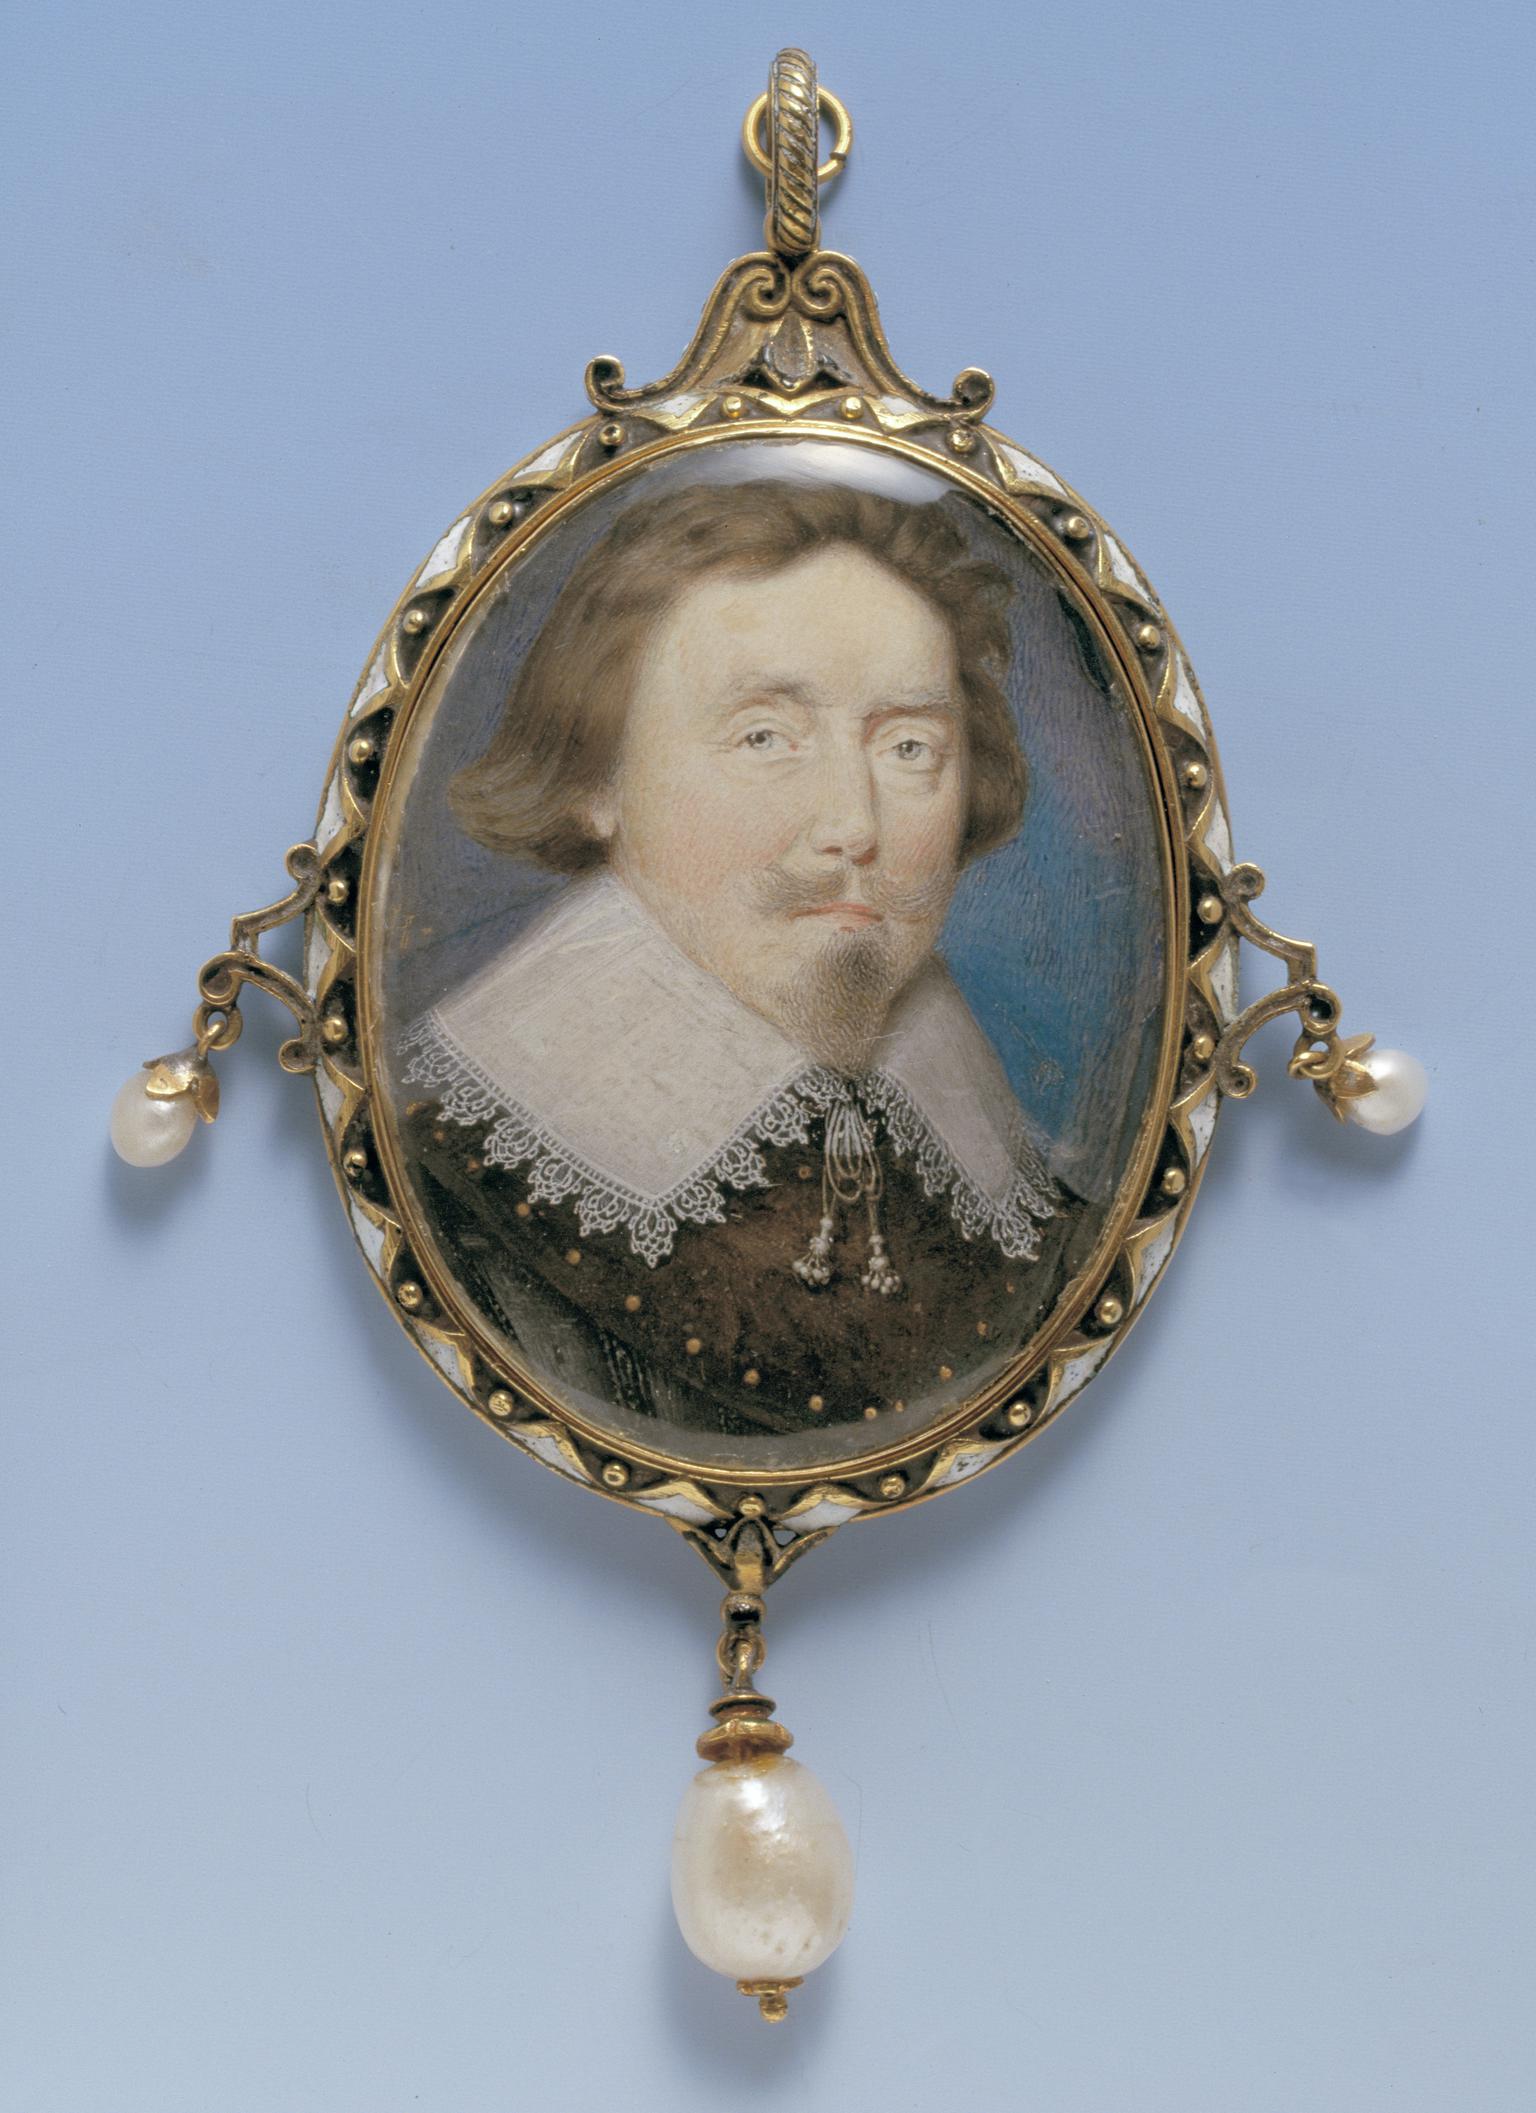 Edward Herbert, 1st Lord Herbert of Cherbury (1583-1648)